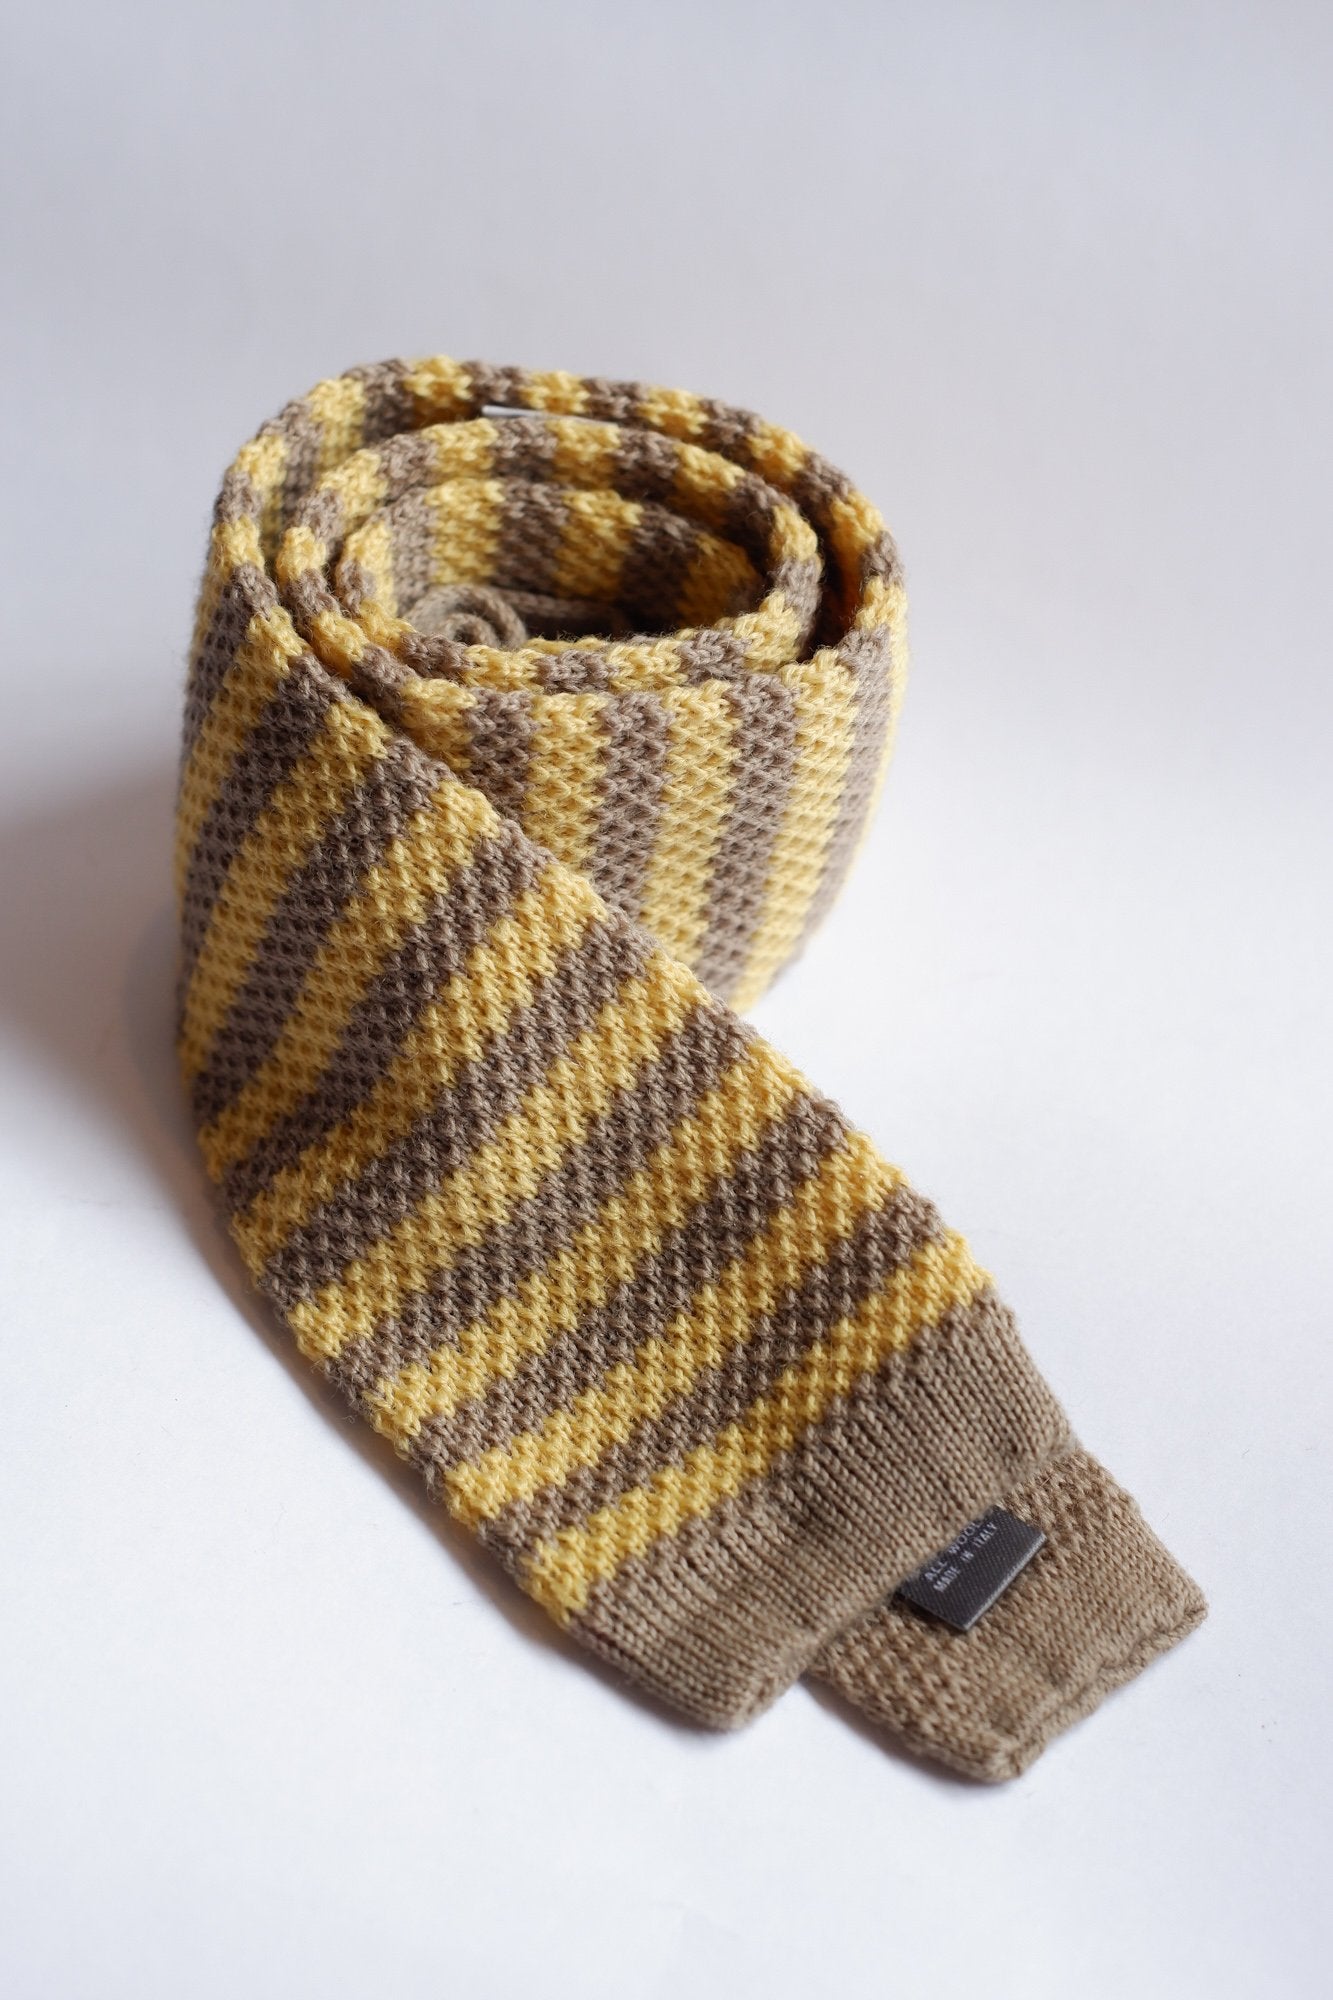 Cerruti 1881 Yellow and Beige Knitted Necktie